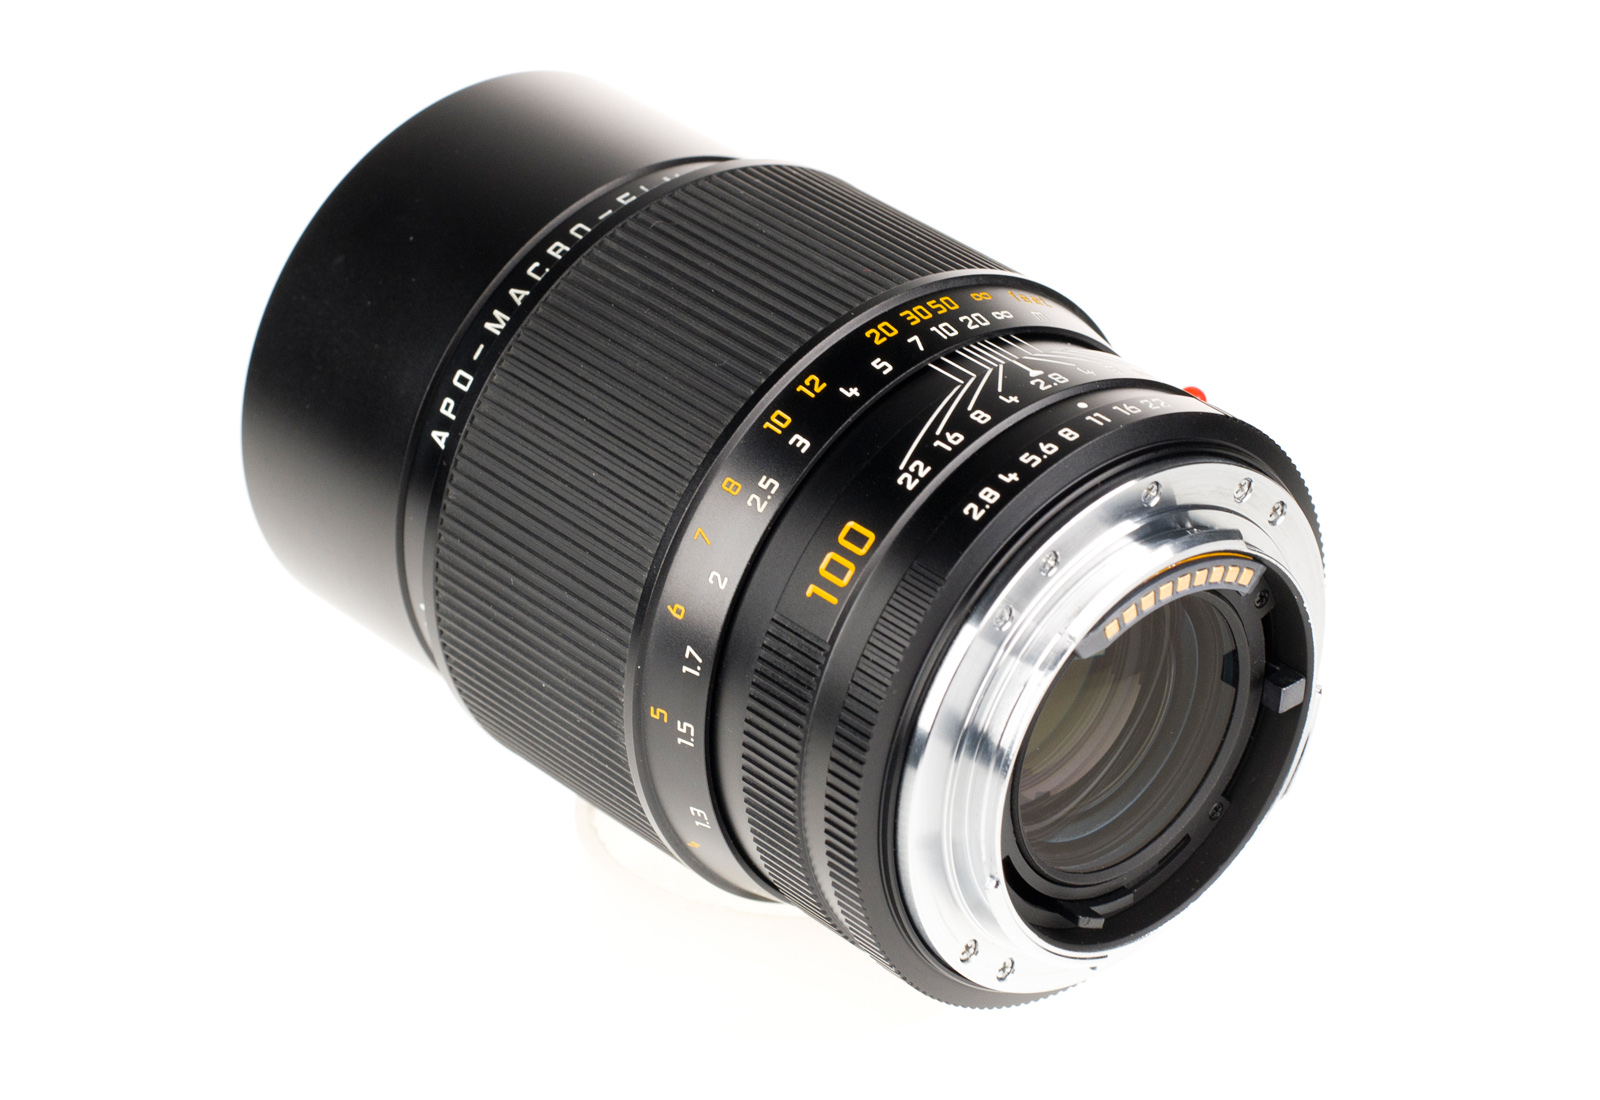 Leica APO-Macro-Elmarit-R 1:2,8/100mm ROM, black 11352